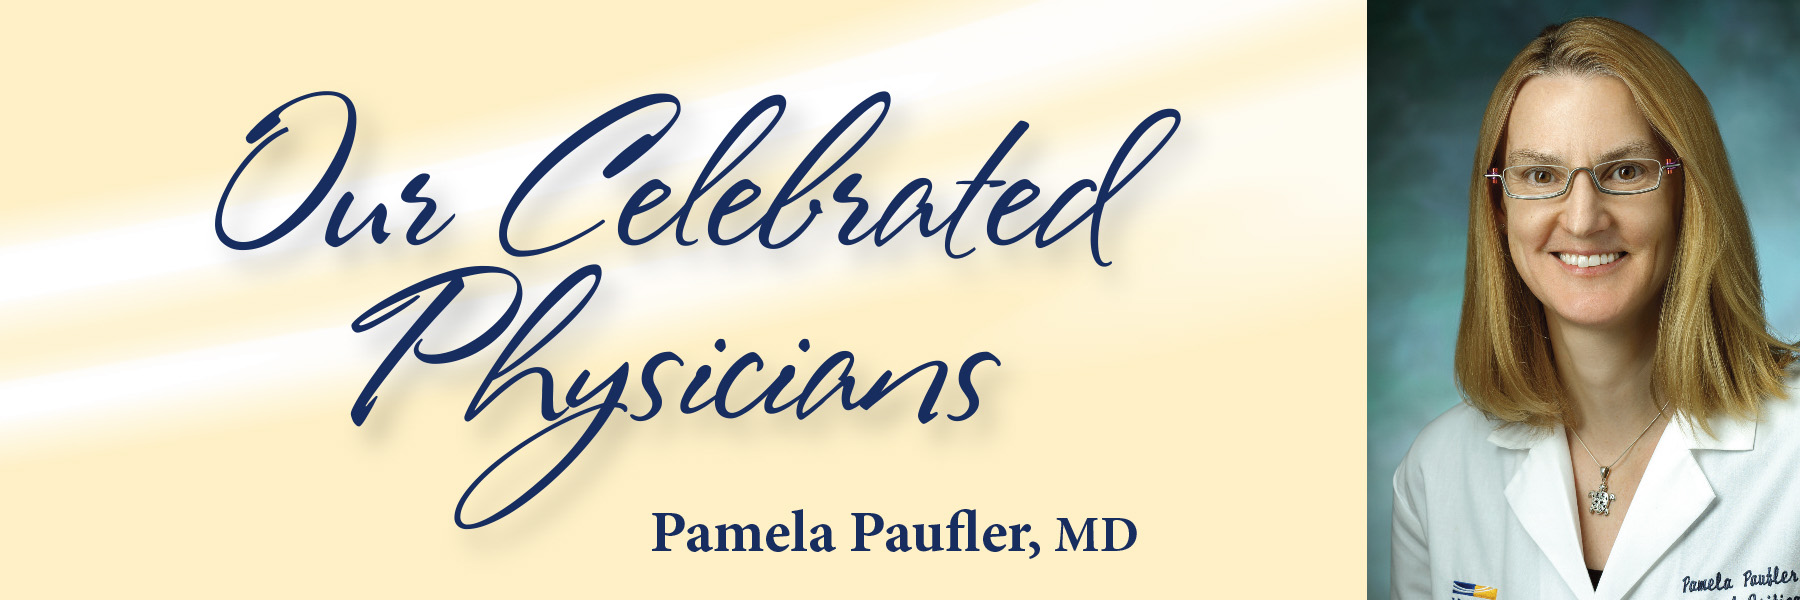 Celebrated-Physician-BLOG_Paufier-Pamela